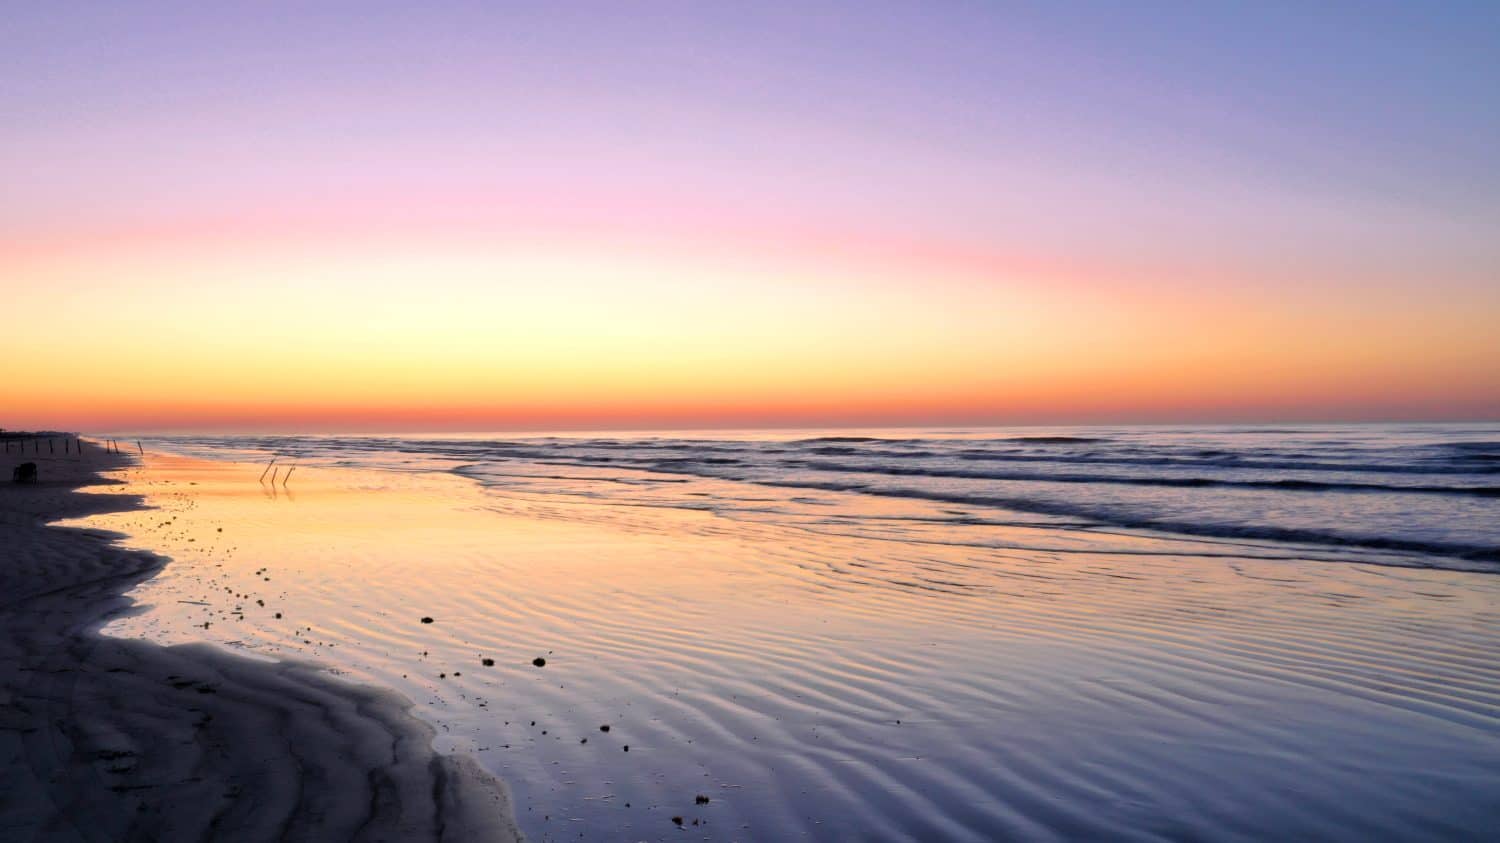 Sunrise at Jamaica Beach, TX